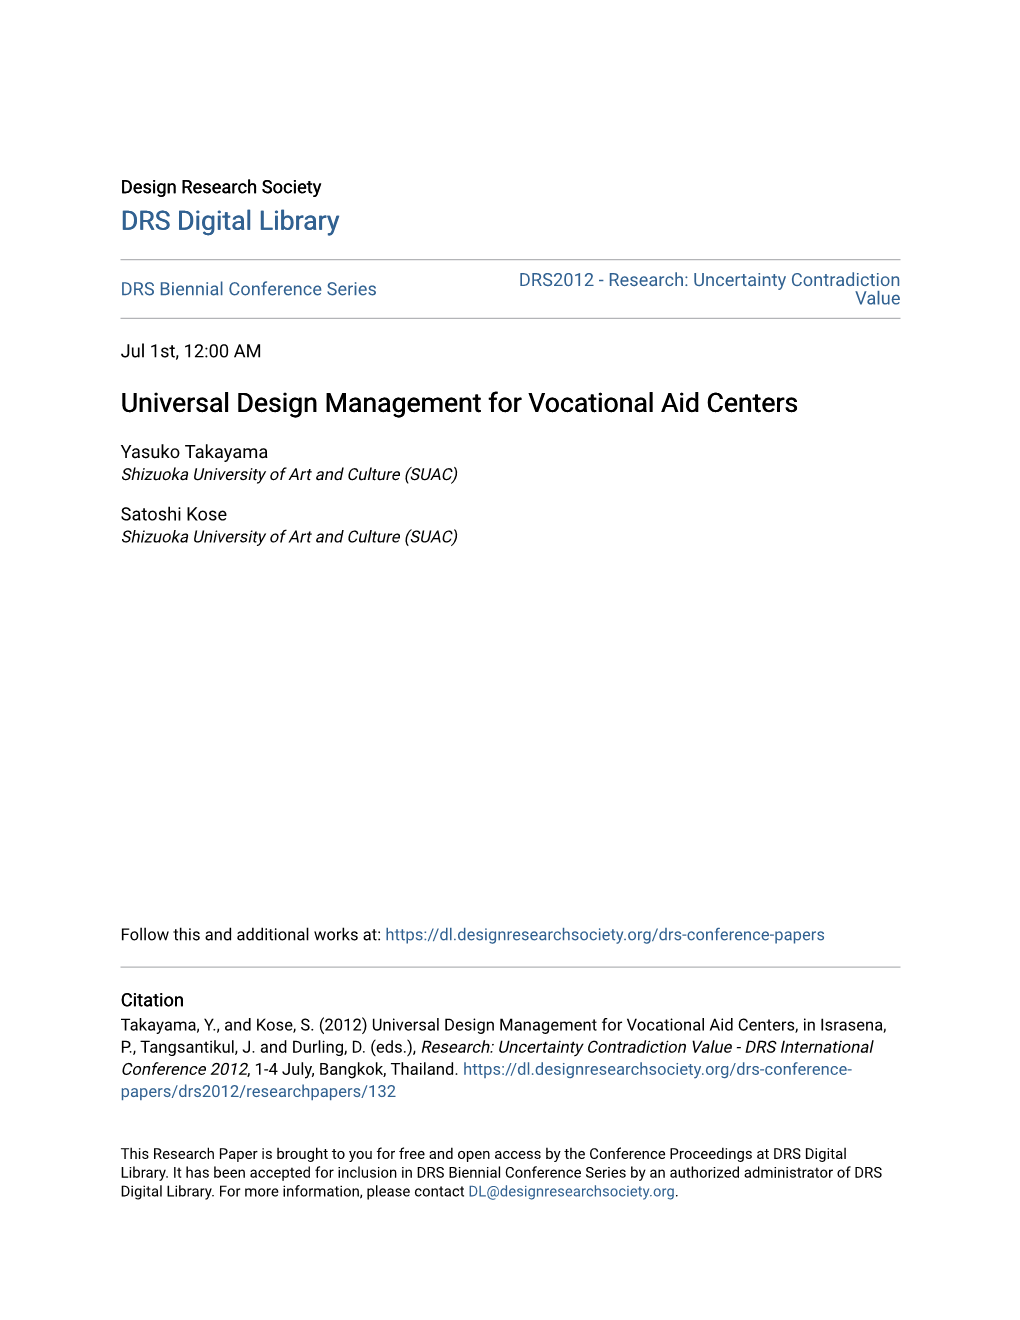 Universal Design Management for Vocational Aid Centers